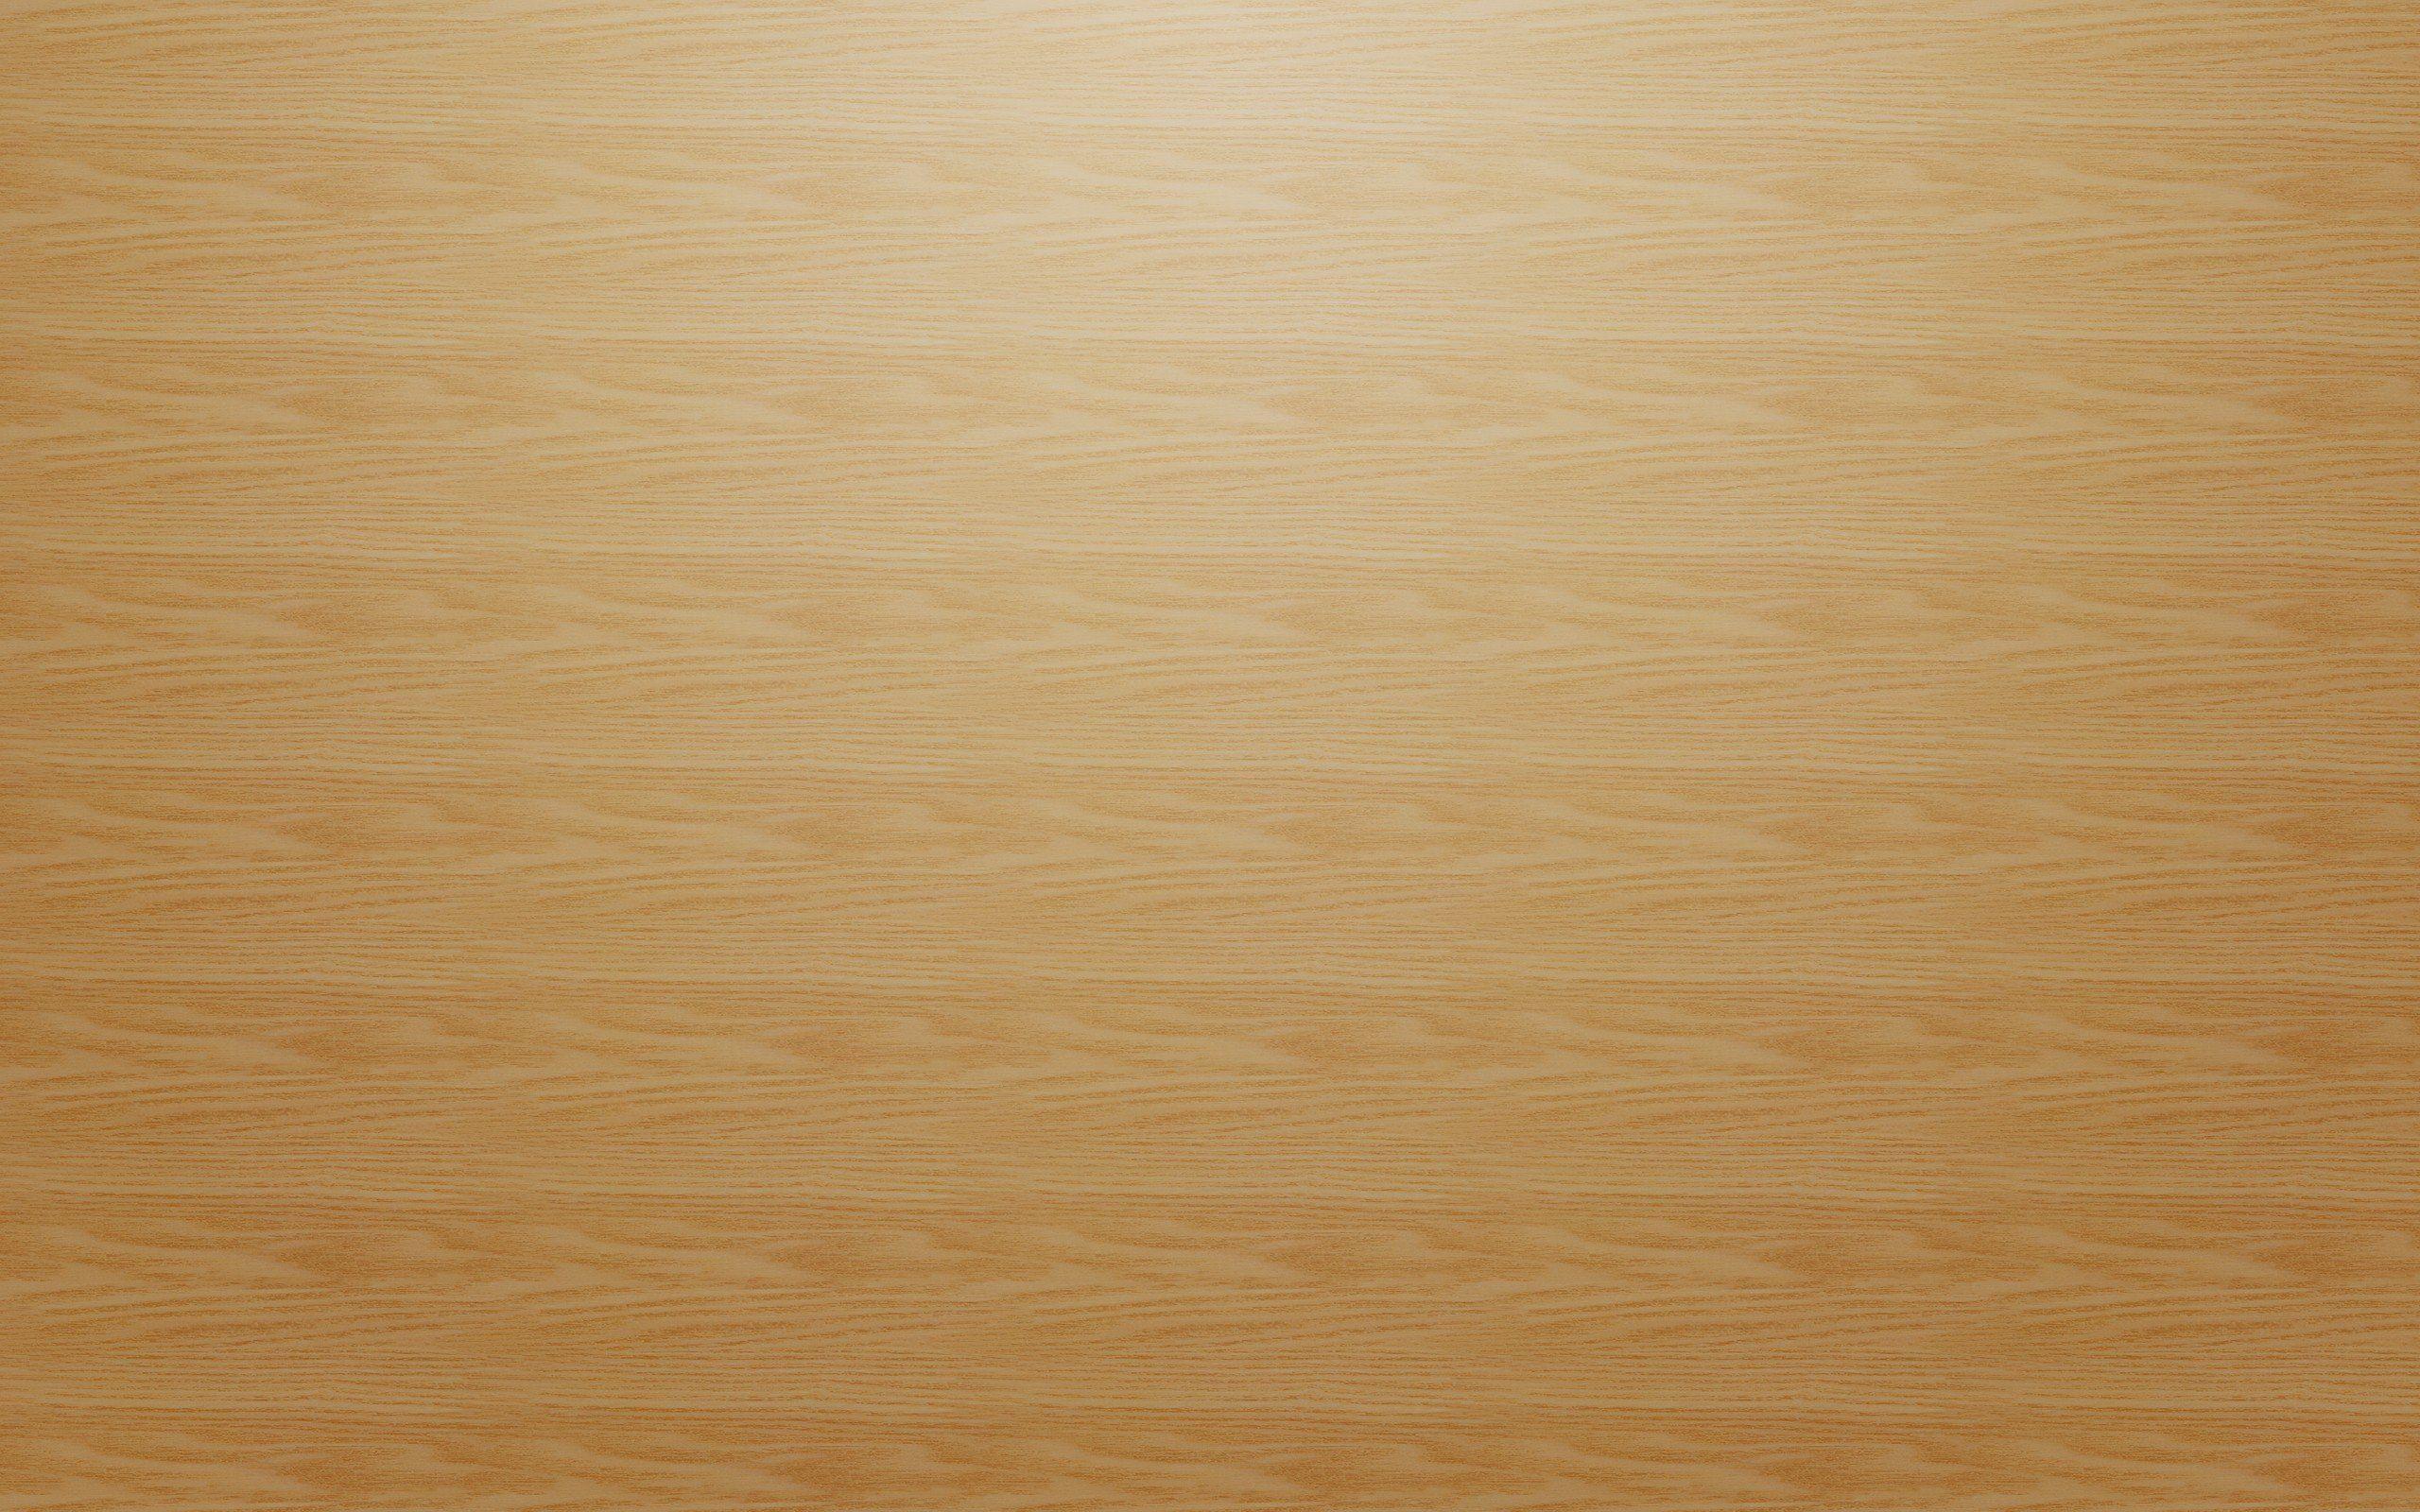 Decoration Light Brown Wood Flooring With Dark Brown Hardwood Floor